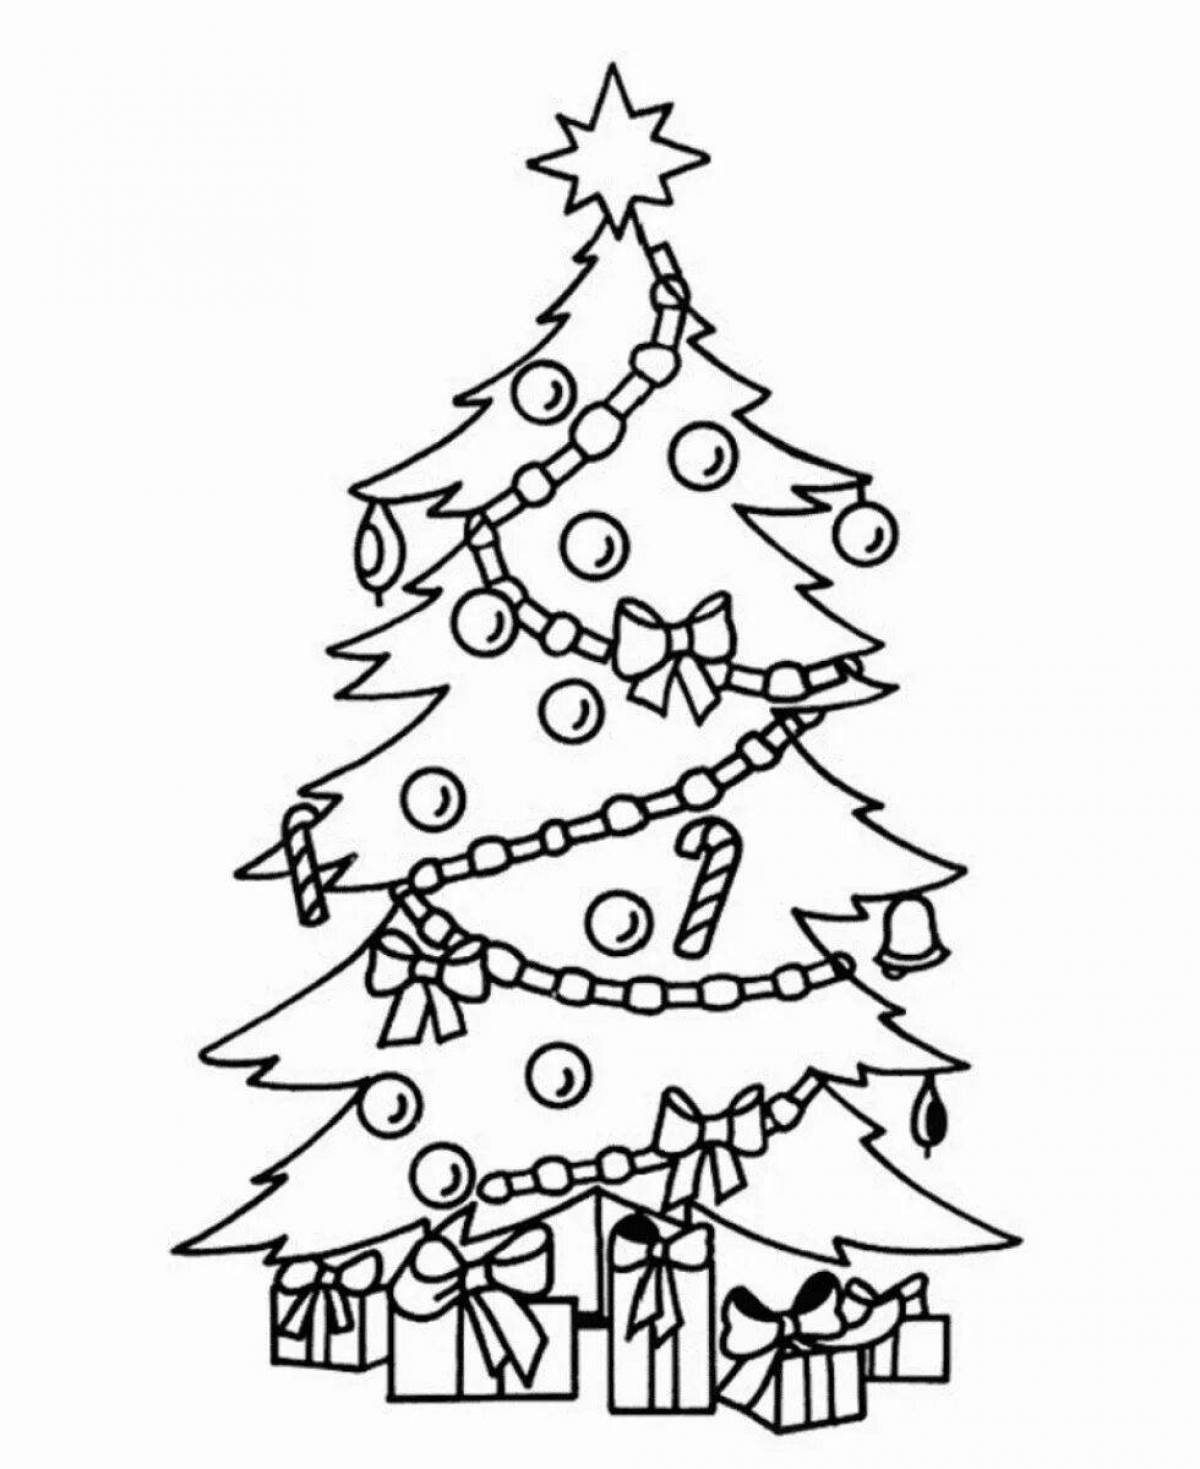 Luminous Christmas tree coloring book